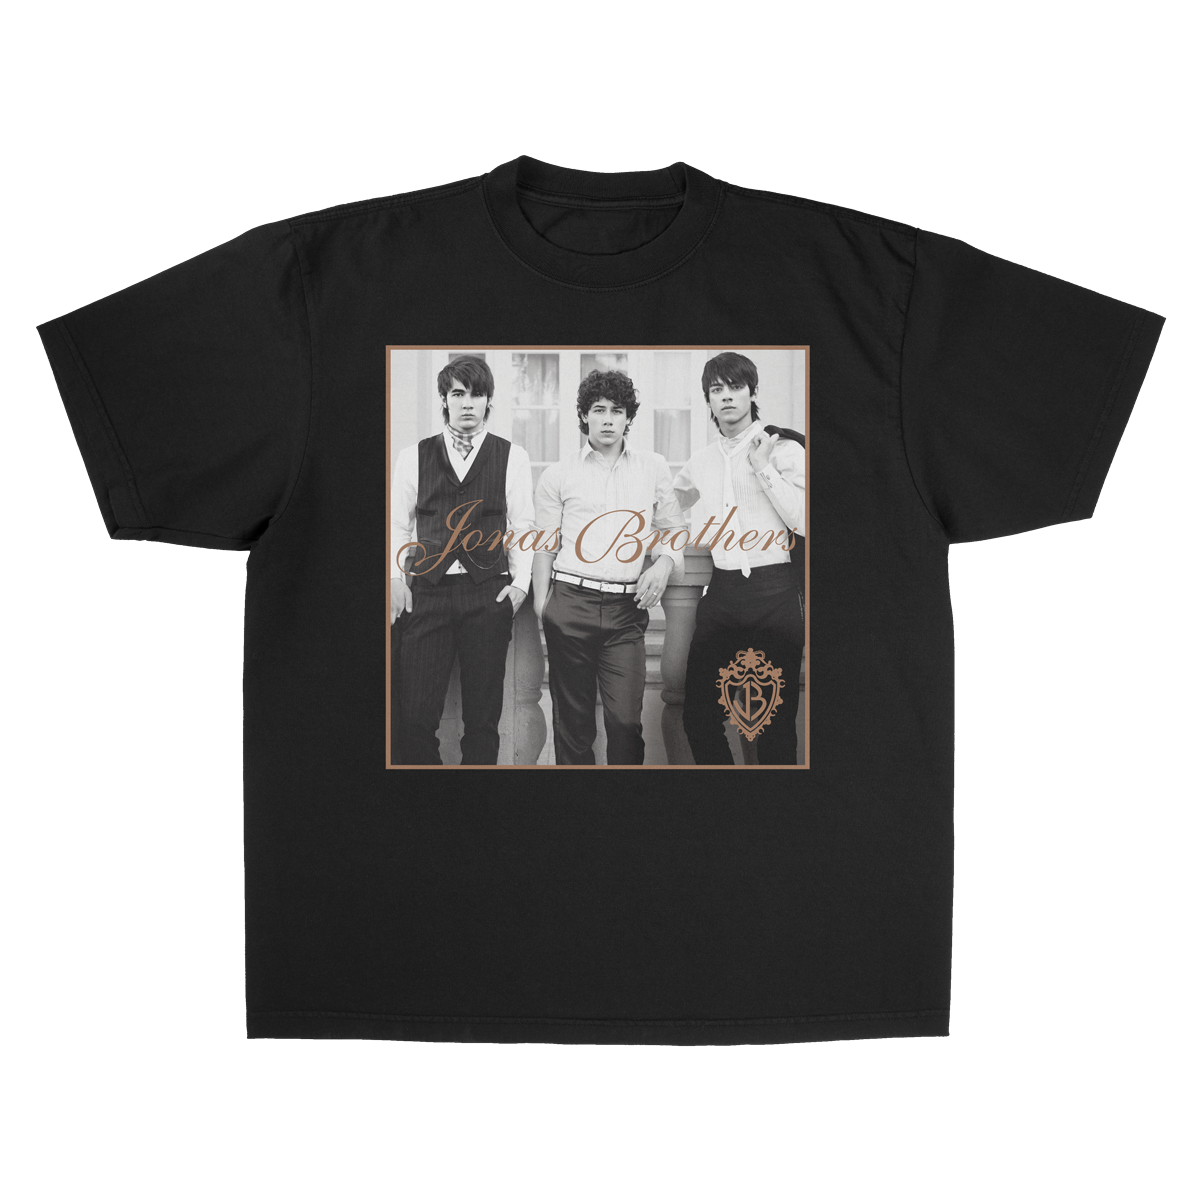 Classics Shirt - Short Sleeve - Black/White - Jonas Brothers Album